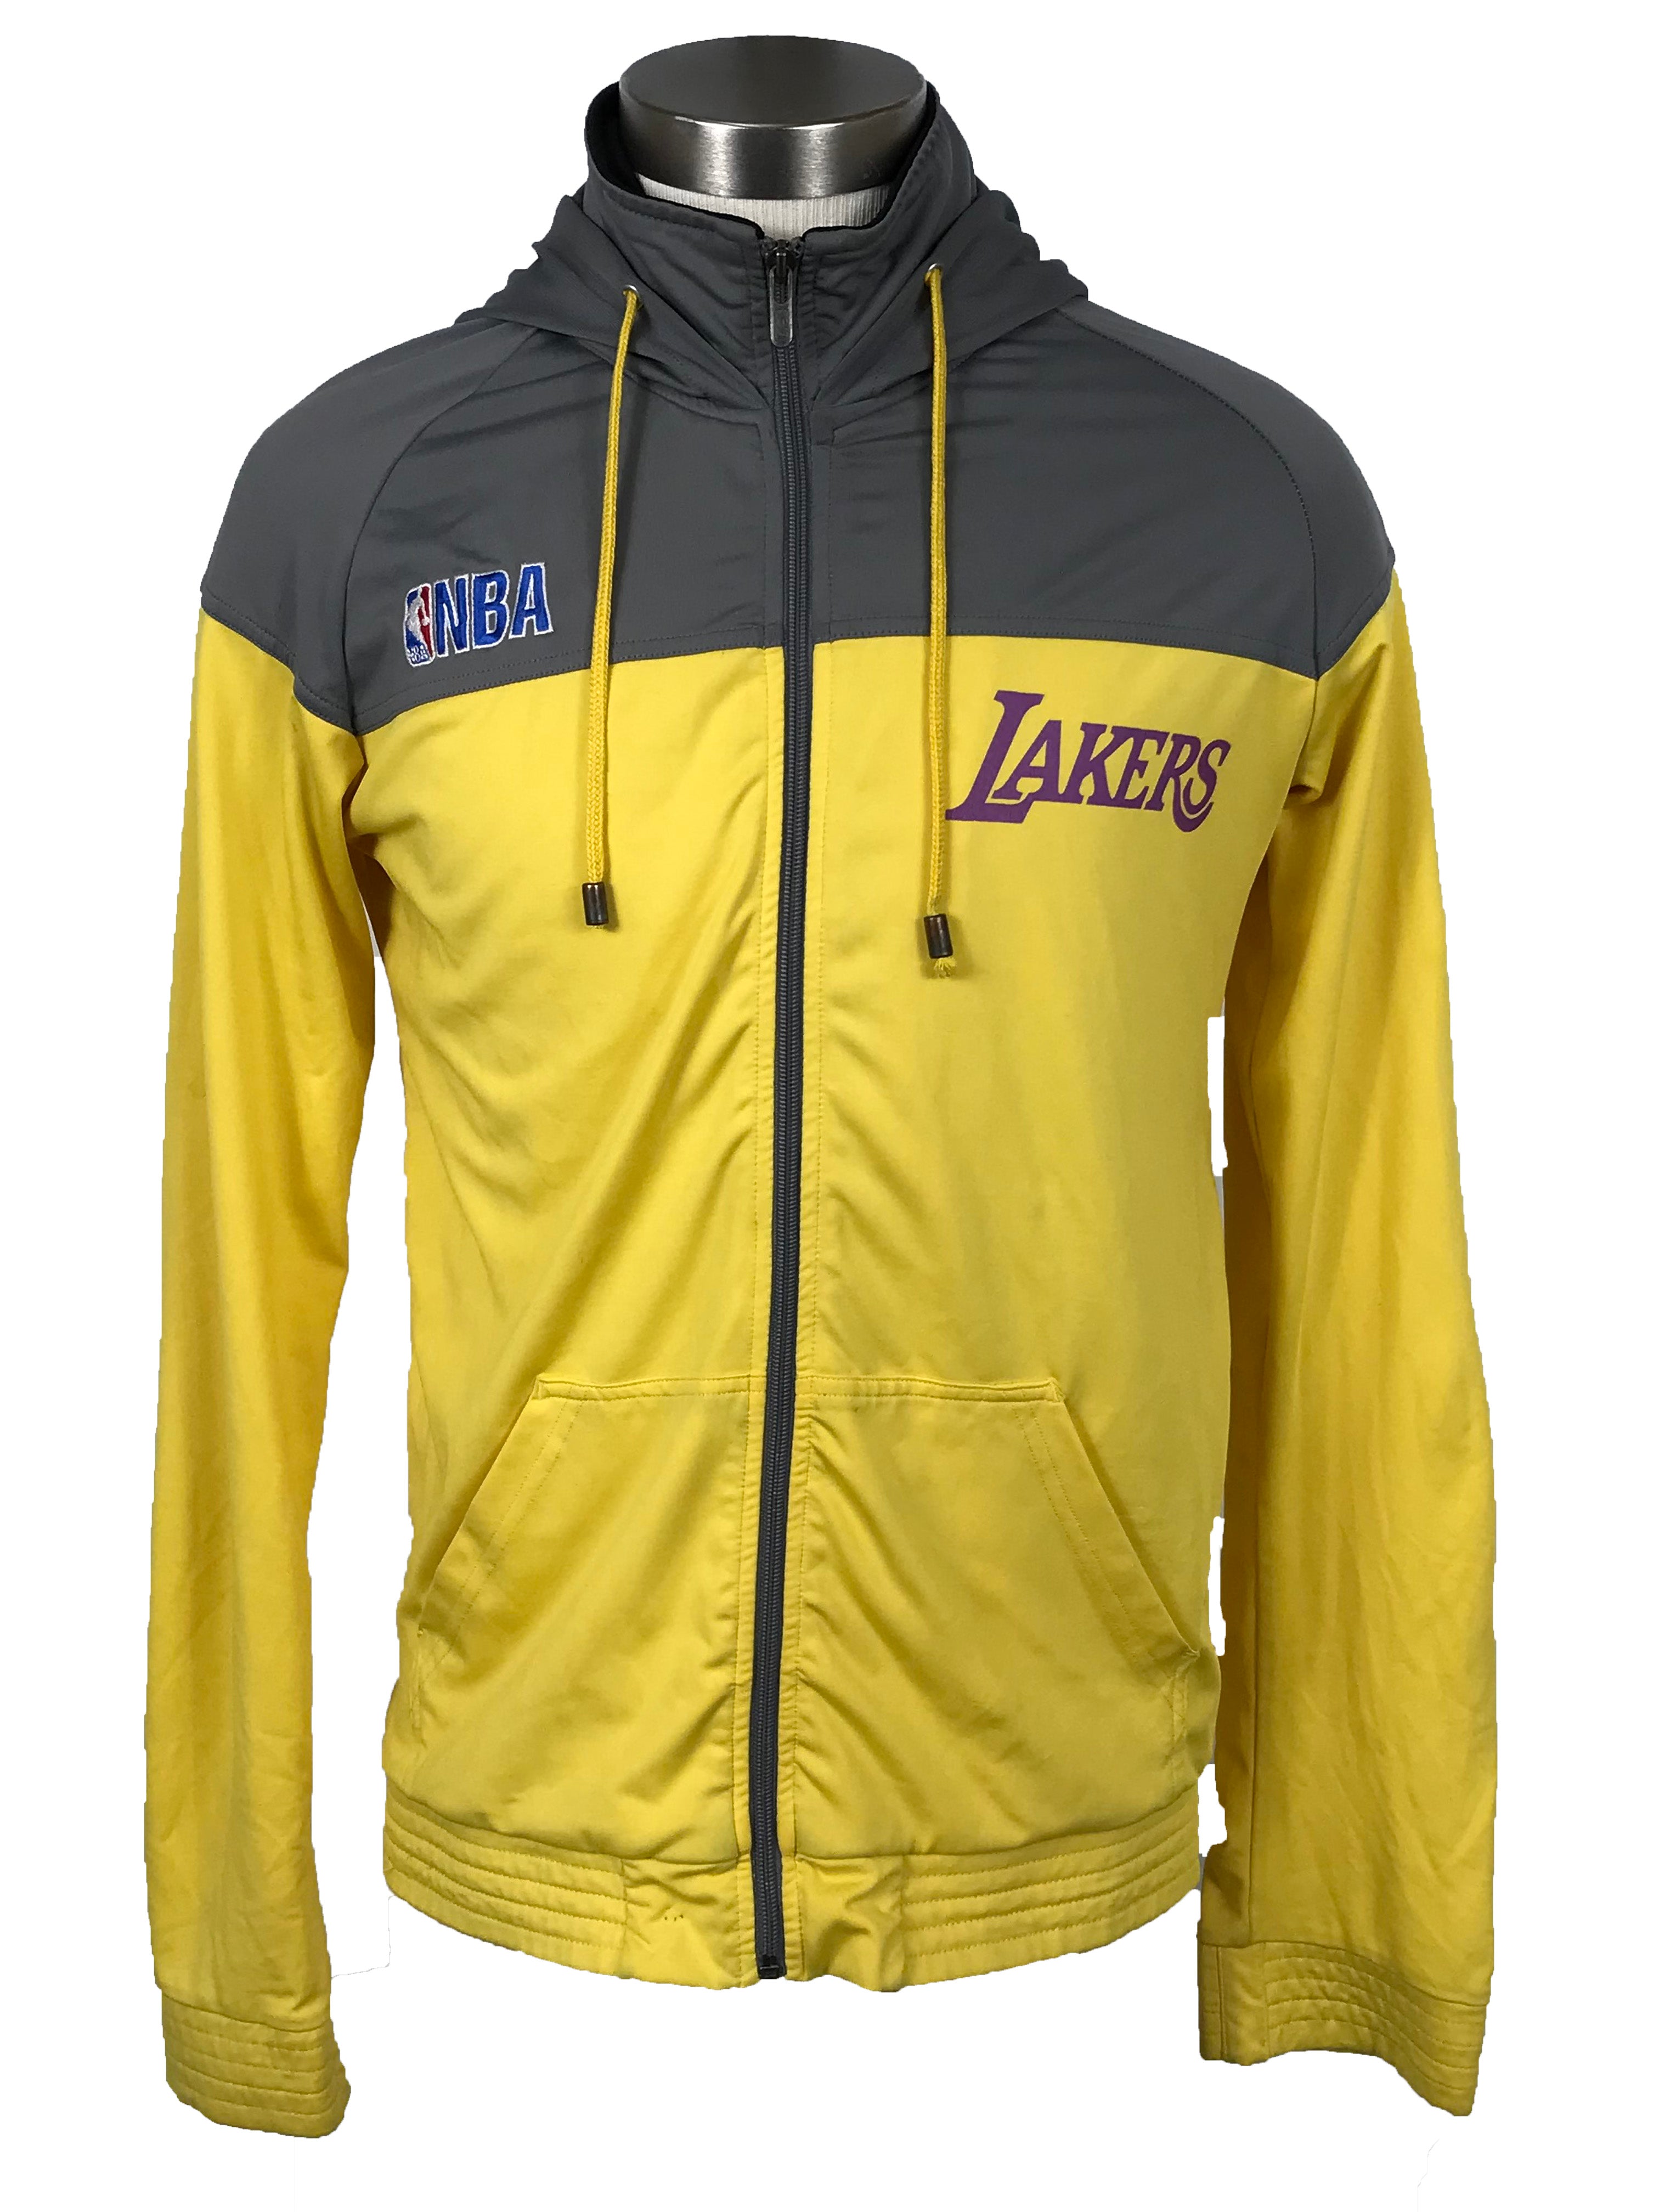 NBA Lakers Zip-Up Jacket Men's Size M